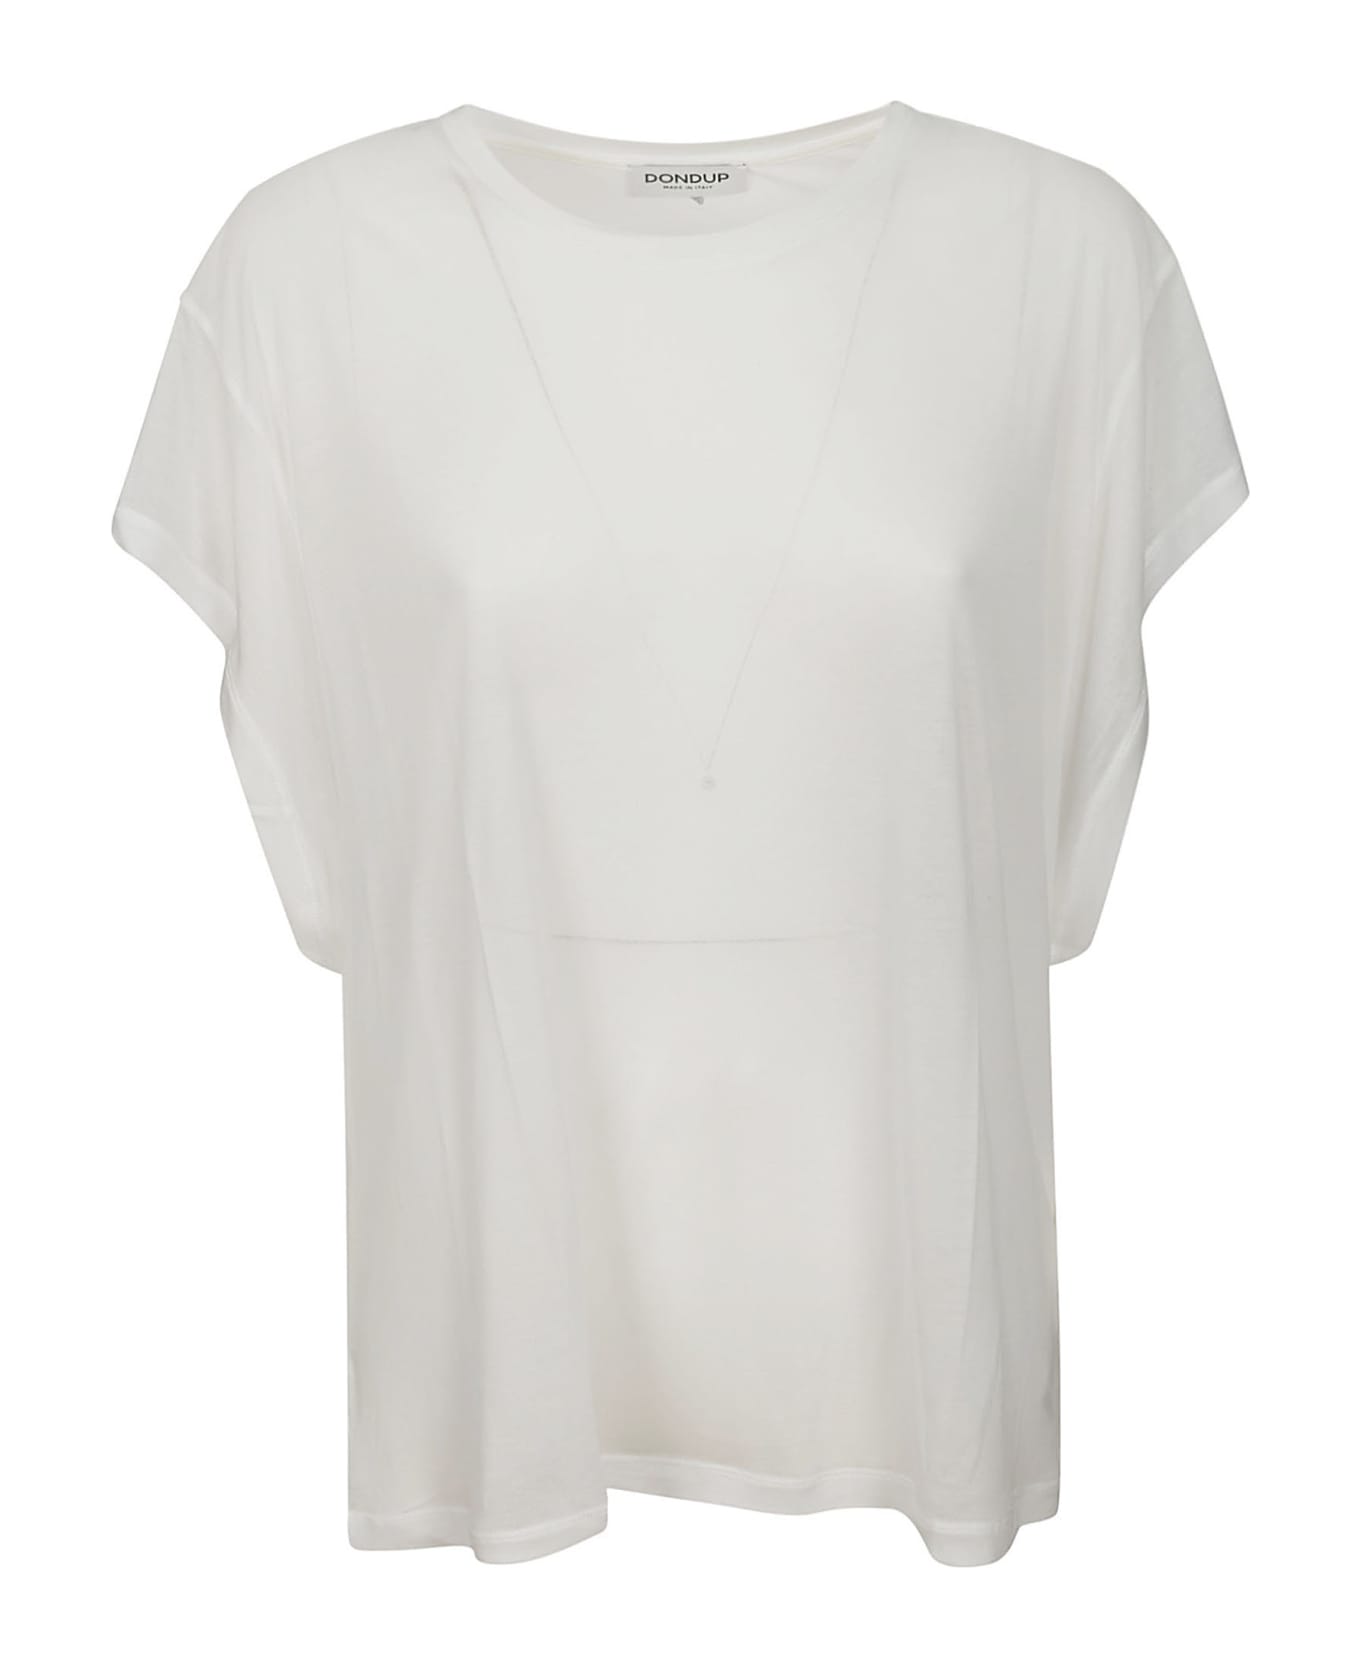 Dondup T-shirt - White Tシャツ